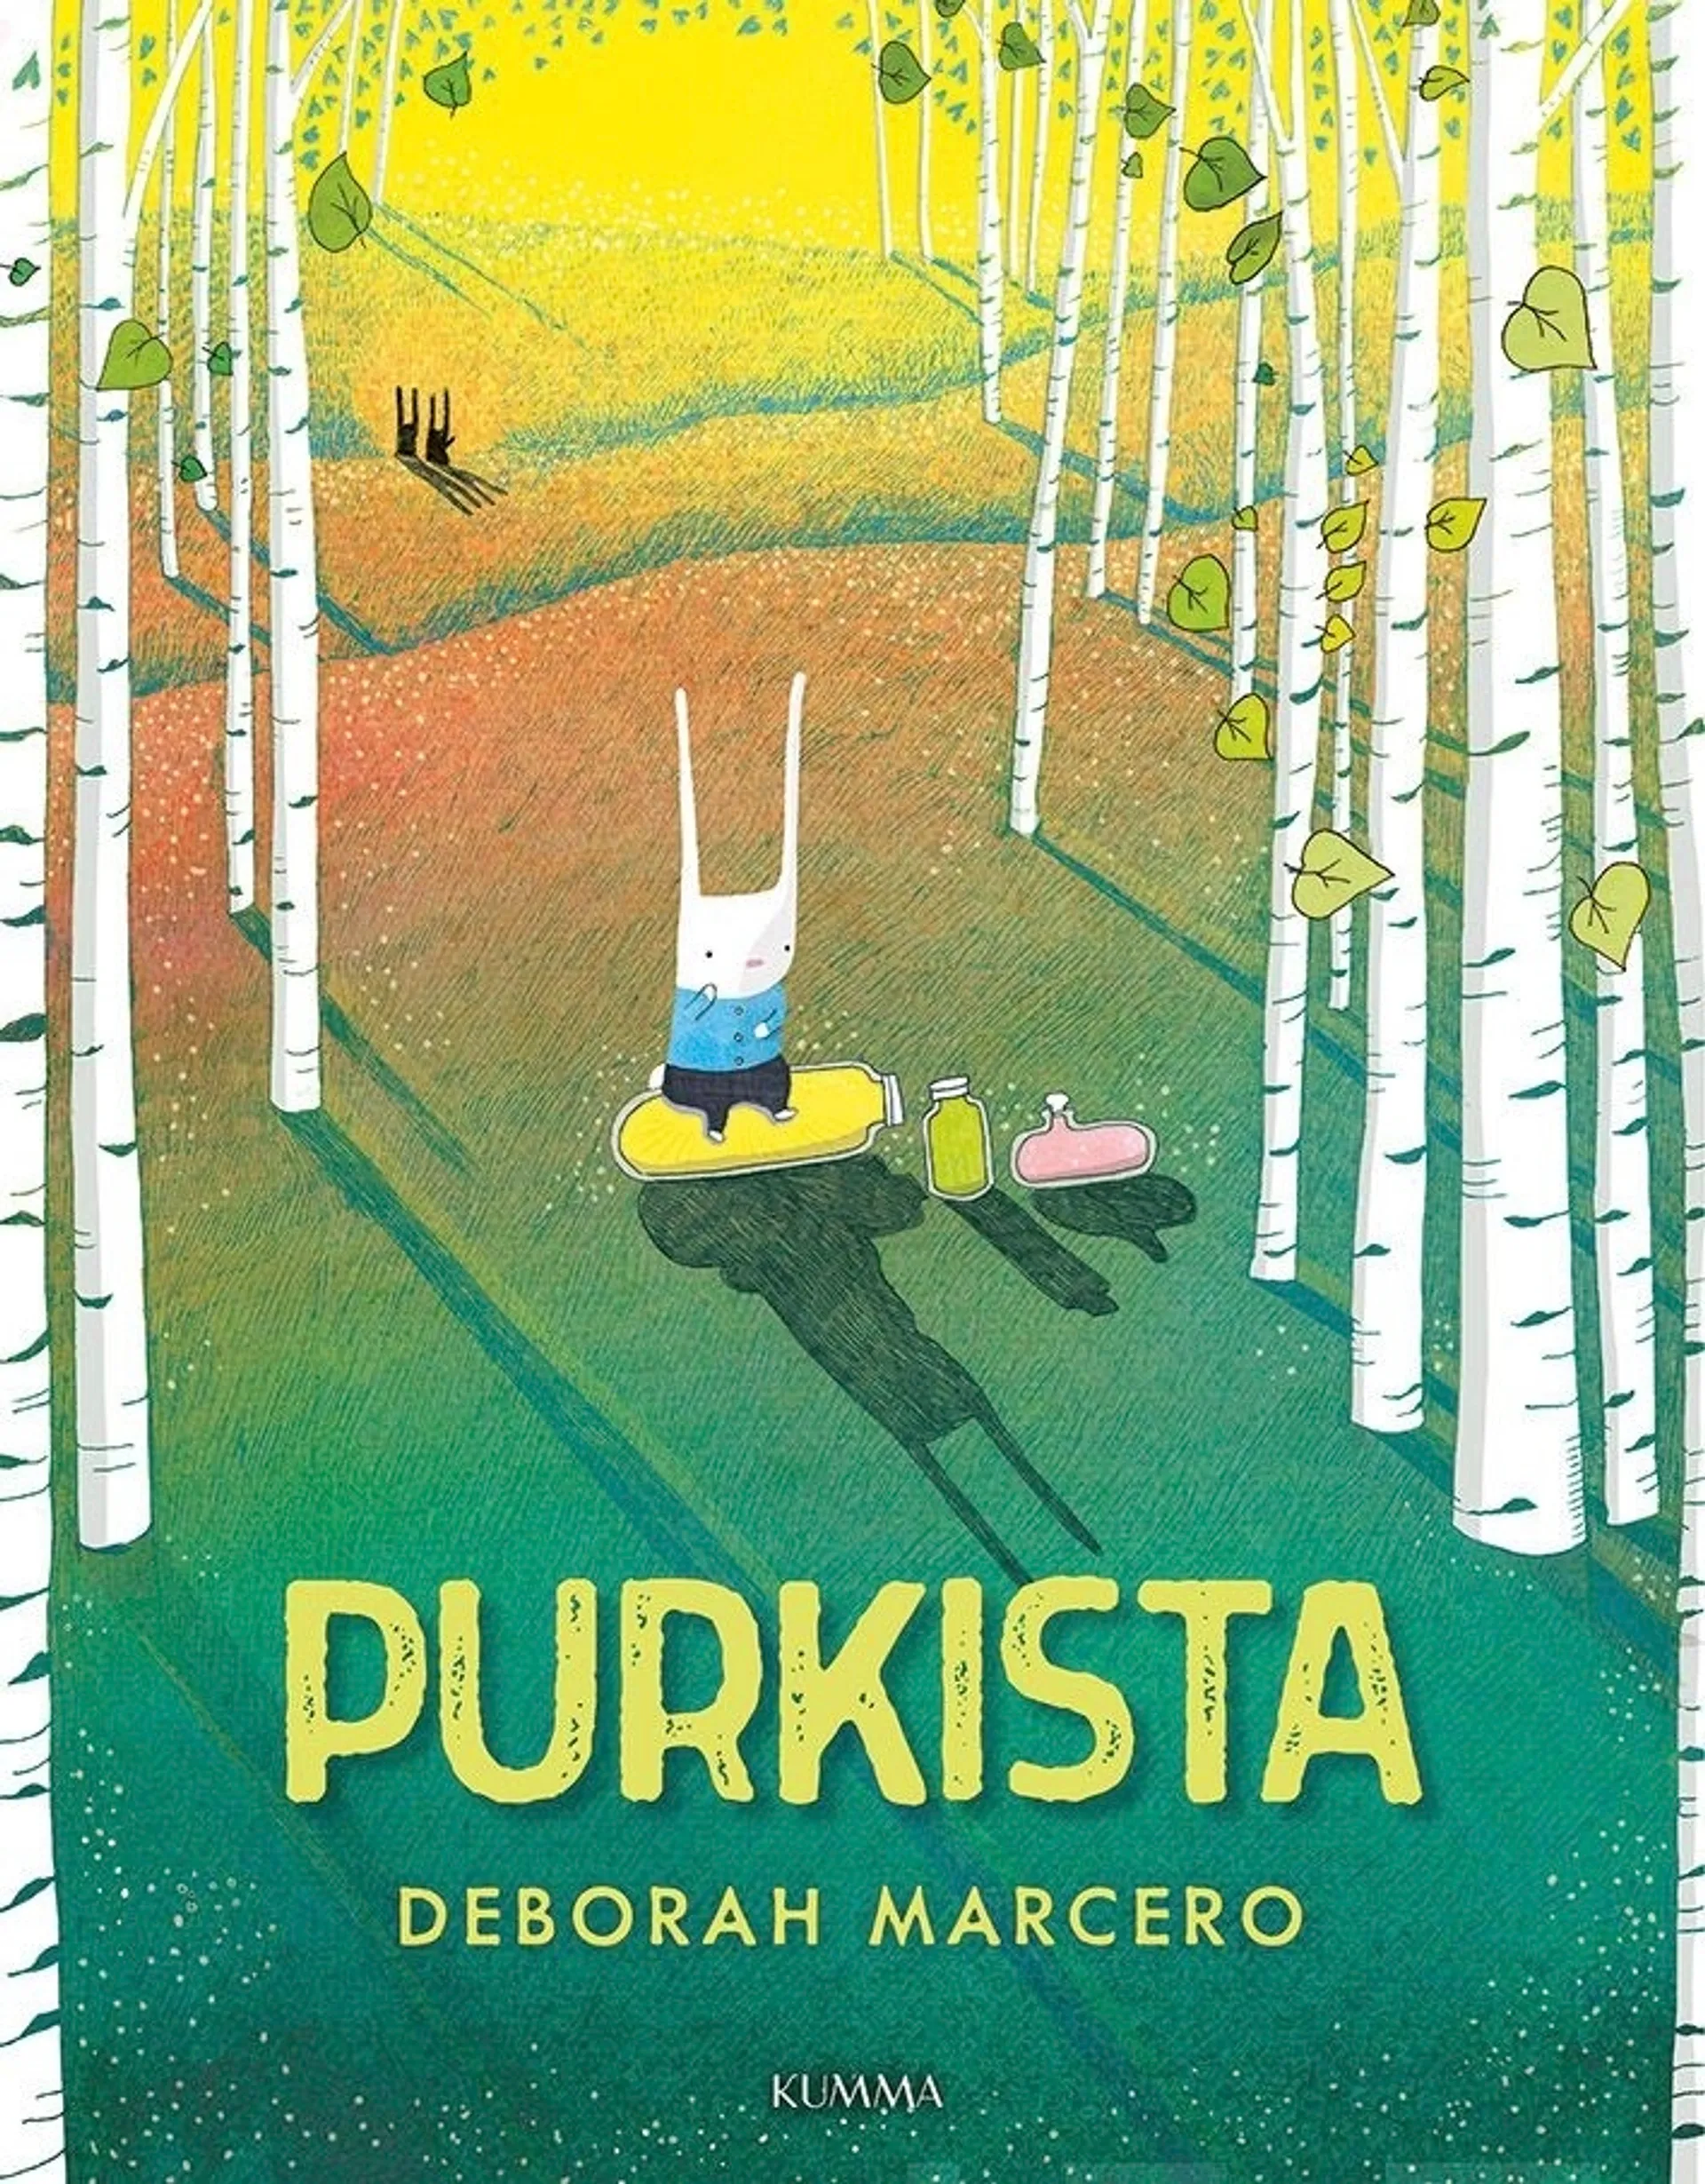 Marcero, Purkista